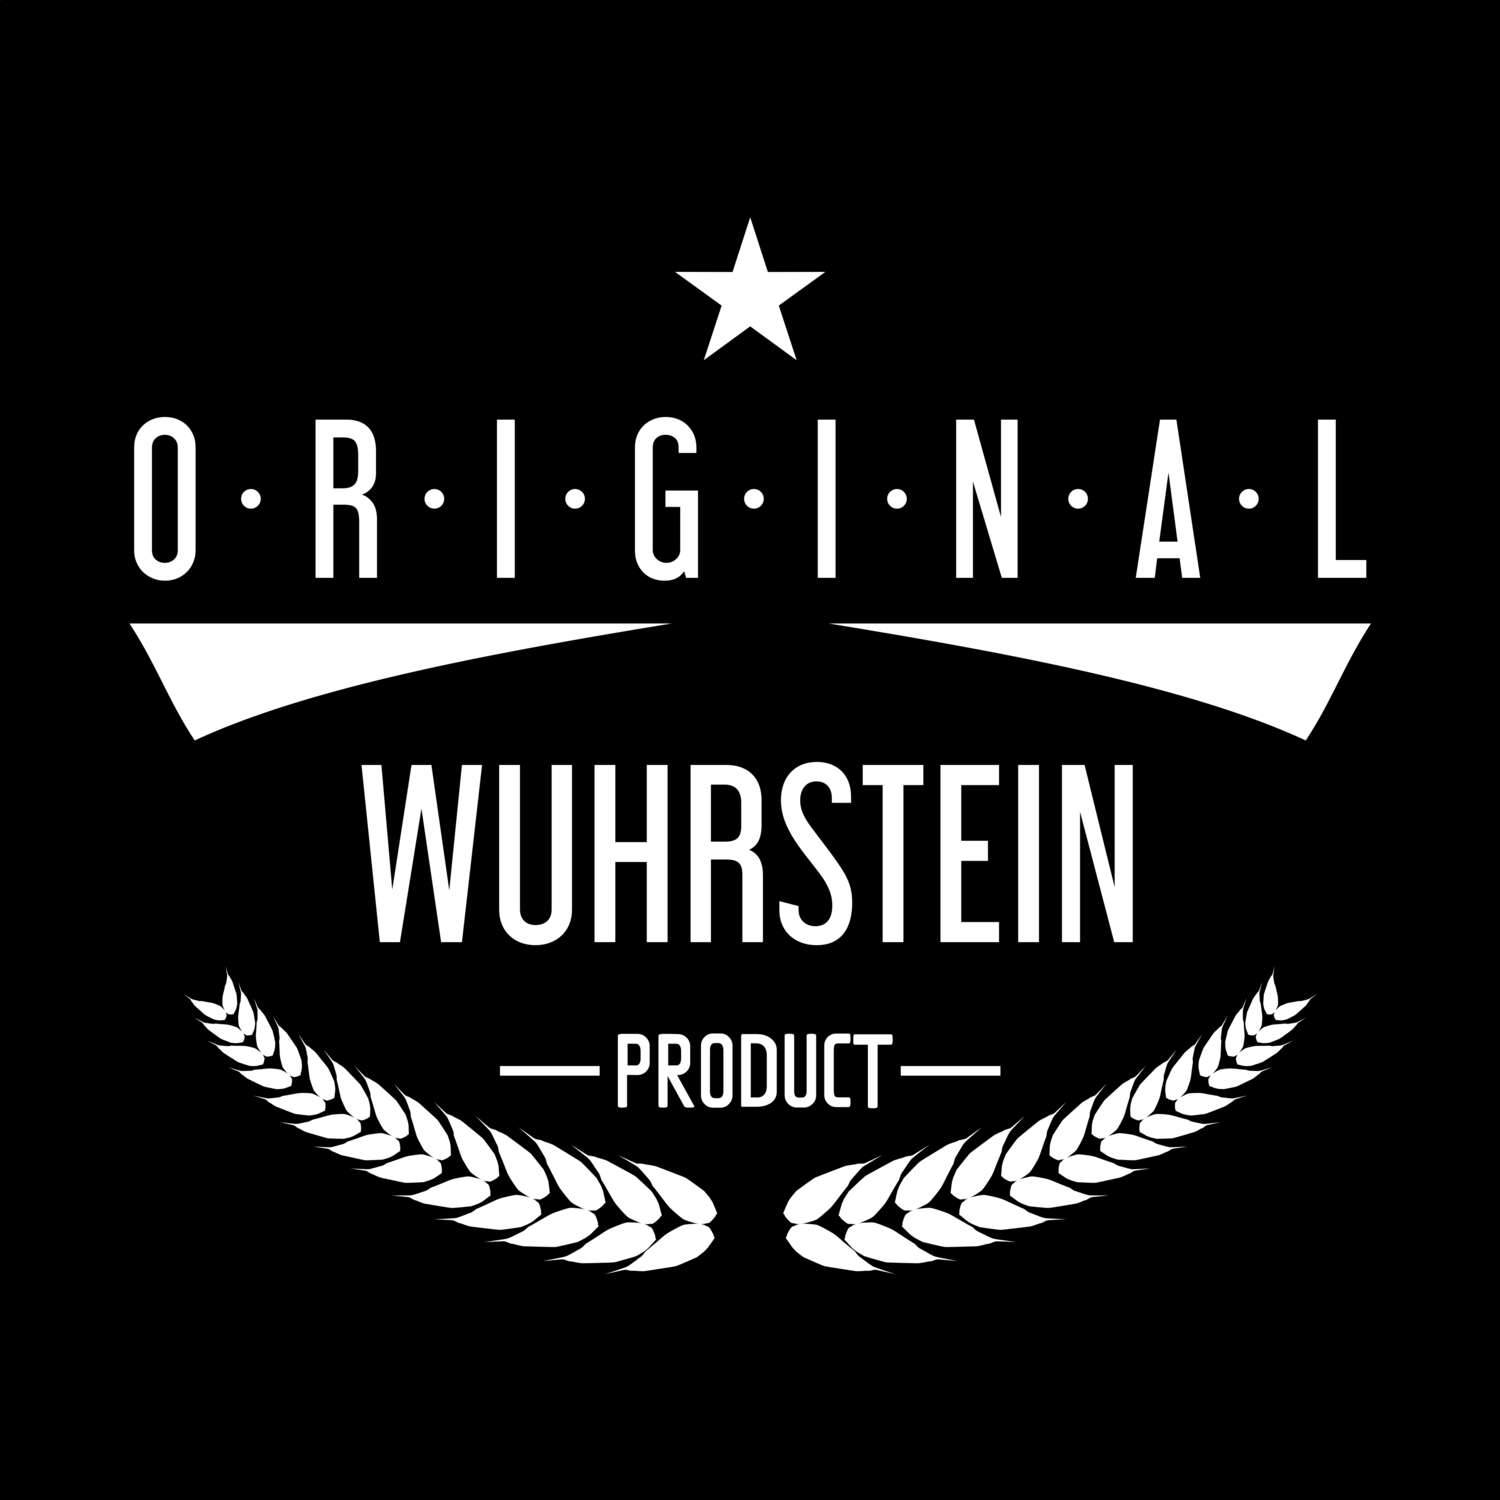 Wuhrstein T-Shirt »Original Product«